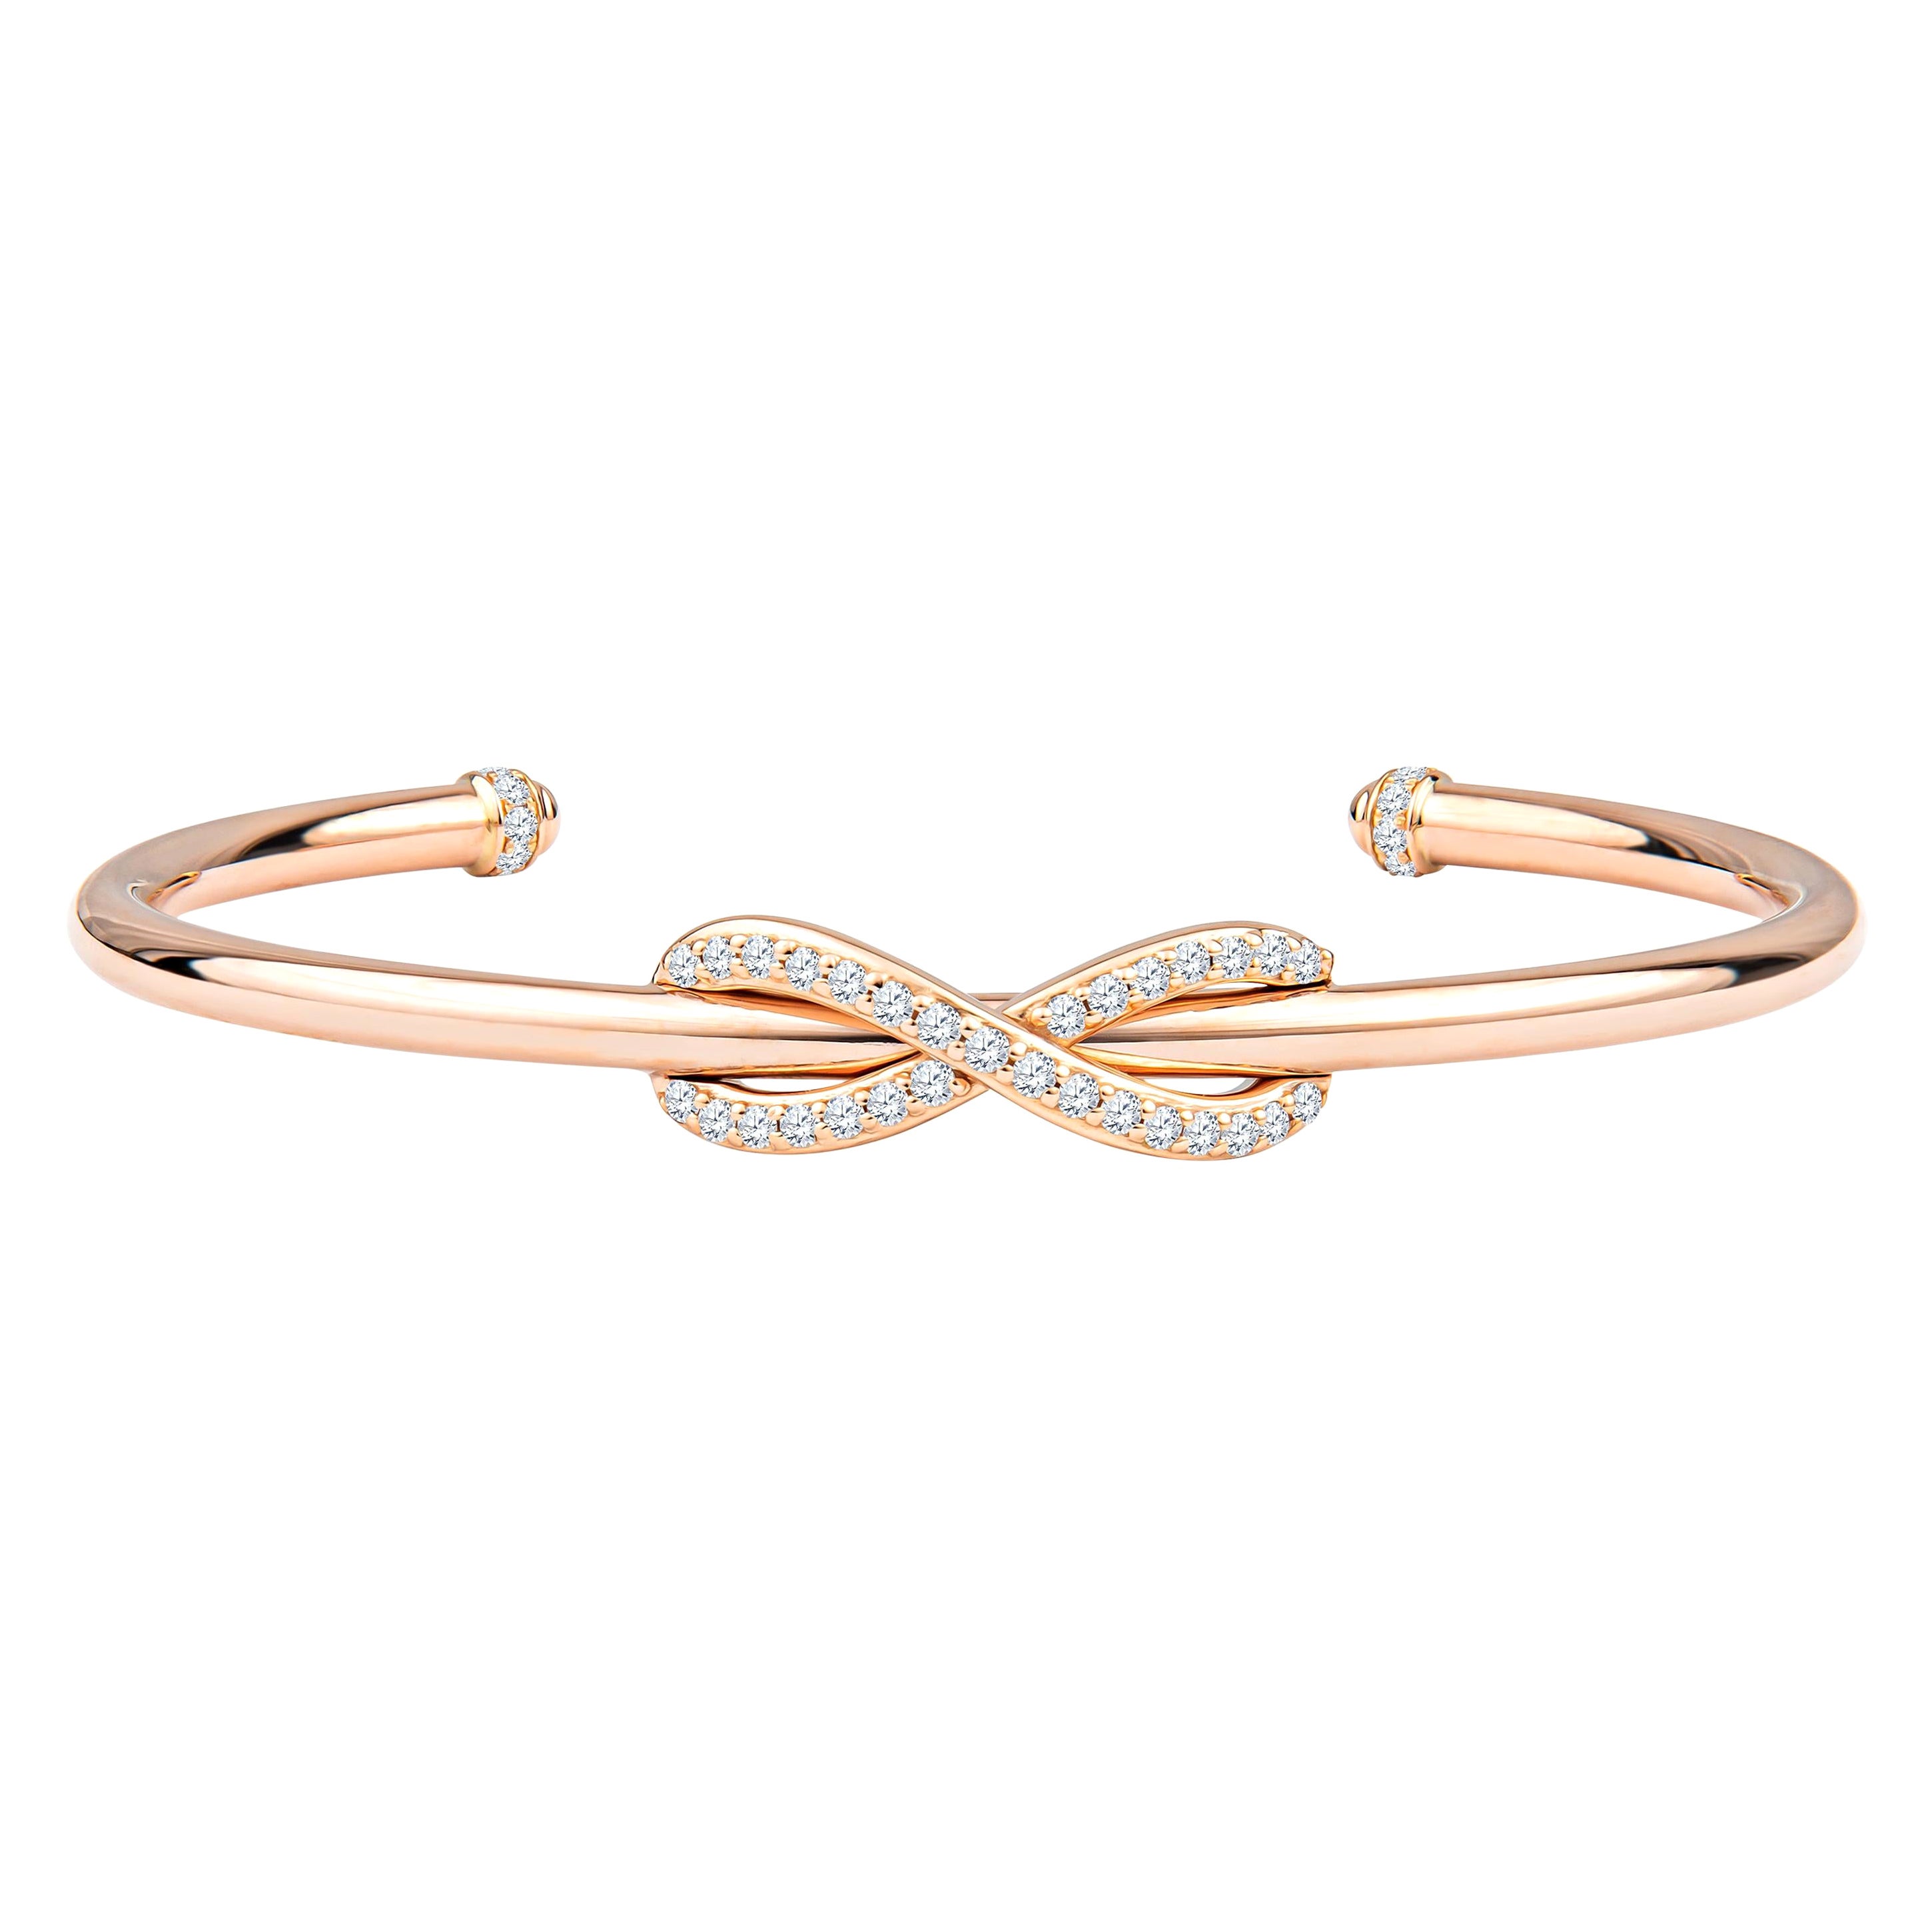 Tiffany Infinity manchette en or rose 18 carats avec diamants ronds 0,39 carat, D-F, VS-VVS